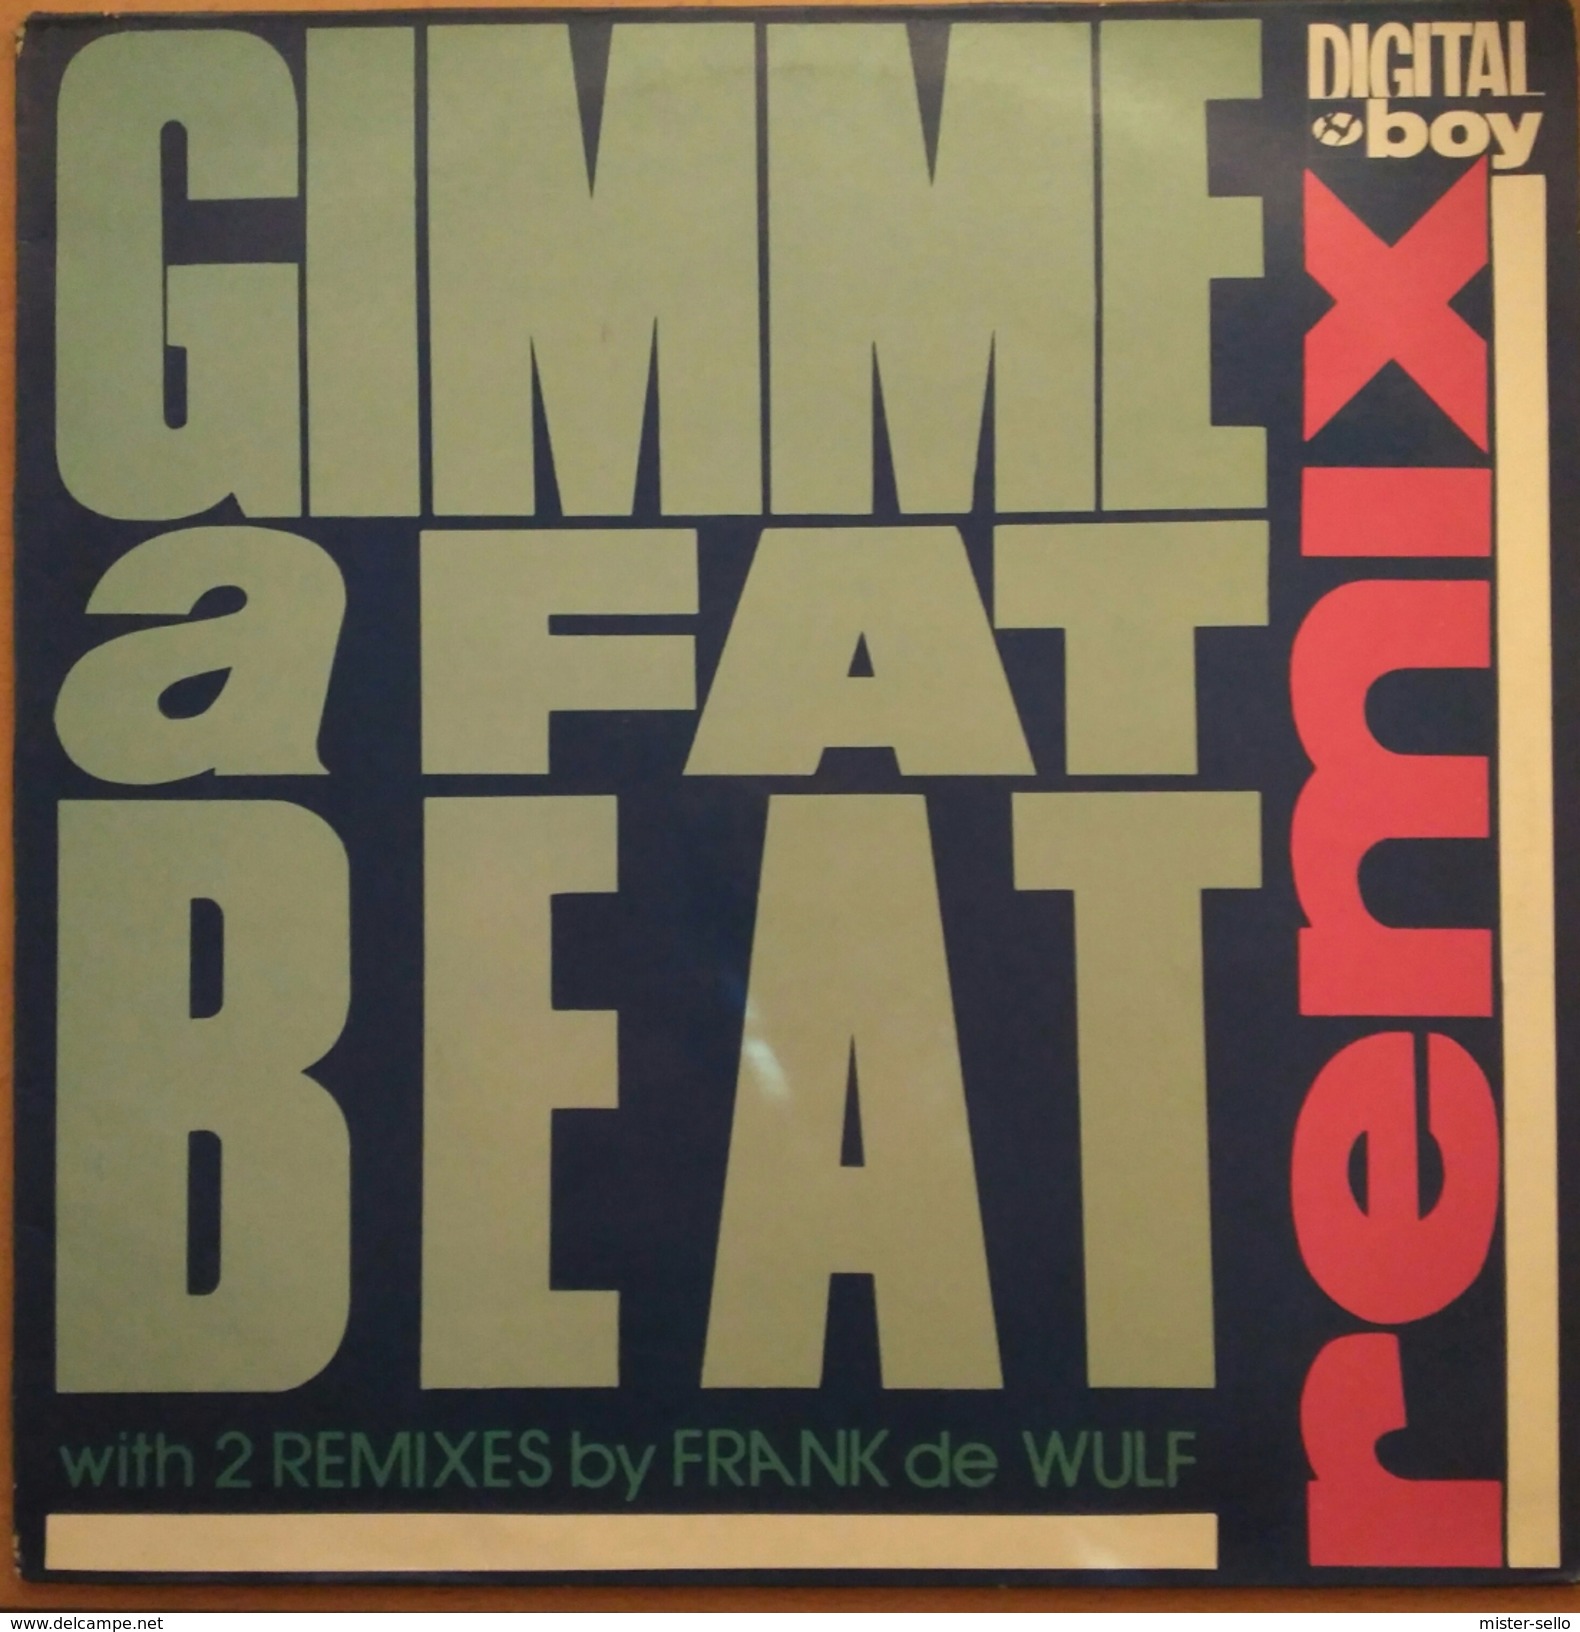 DIGITAL BOY - GIMME A FAT BEAT. MAXI SINGLE. USADO - USED. - 45 G - Maxi-Single